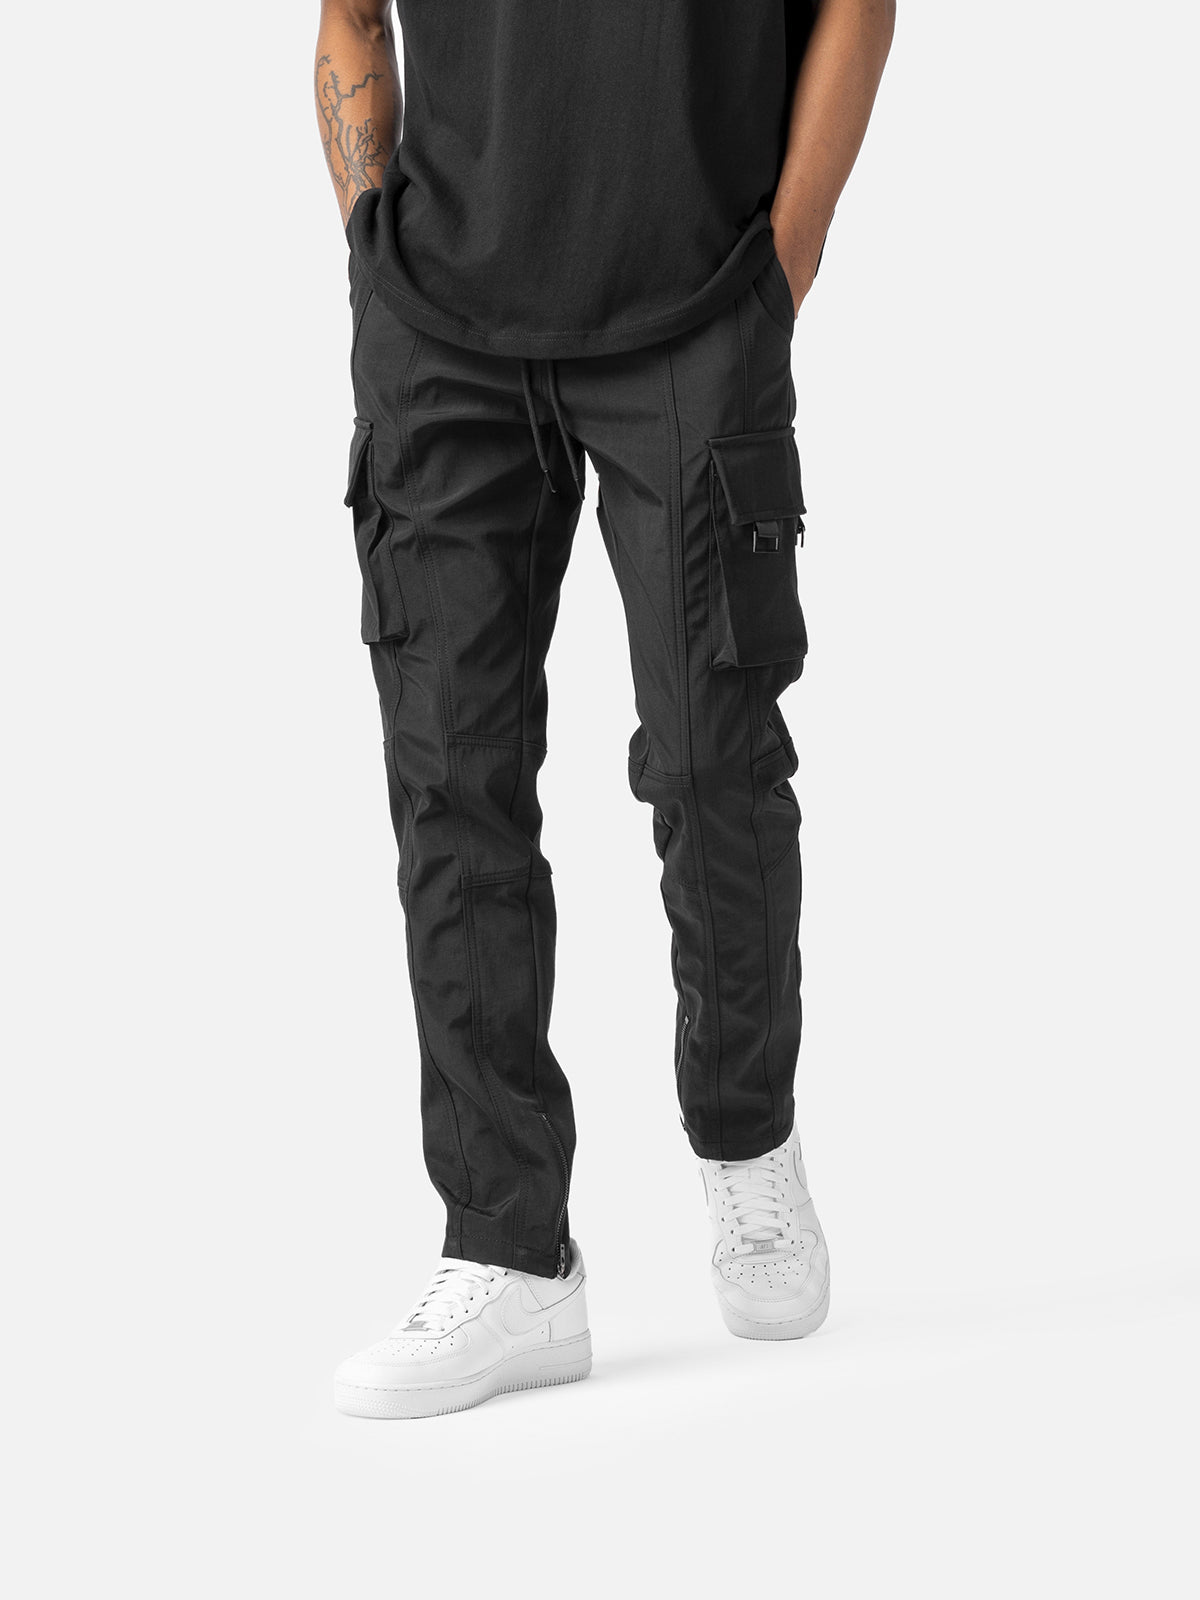 Cargo Trousers for men in Black Color - 6 Pocket Trouser